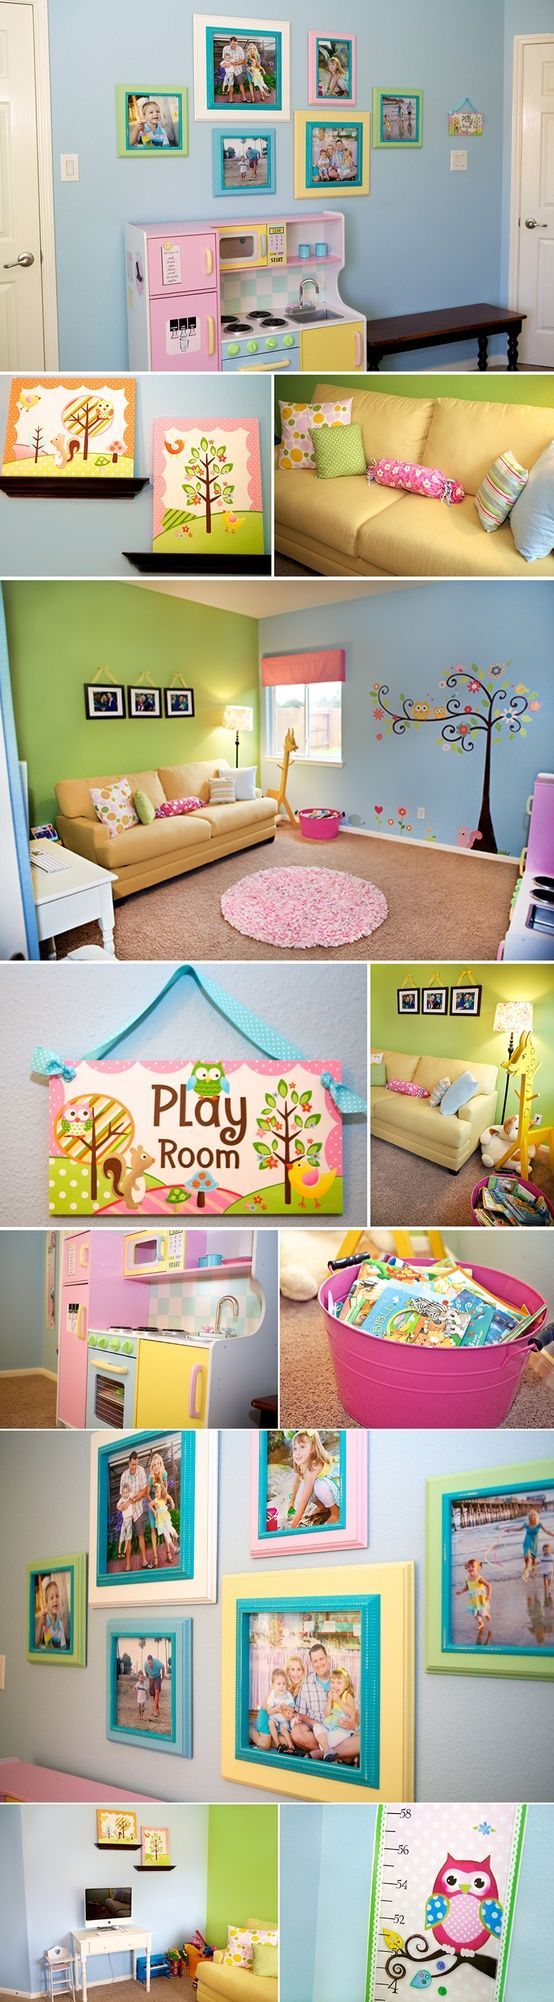 The perfect playroom